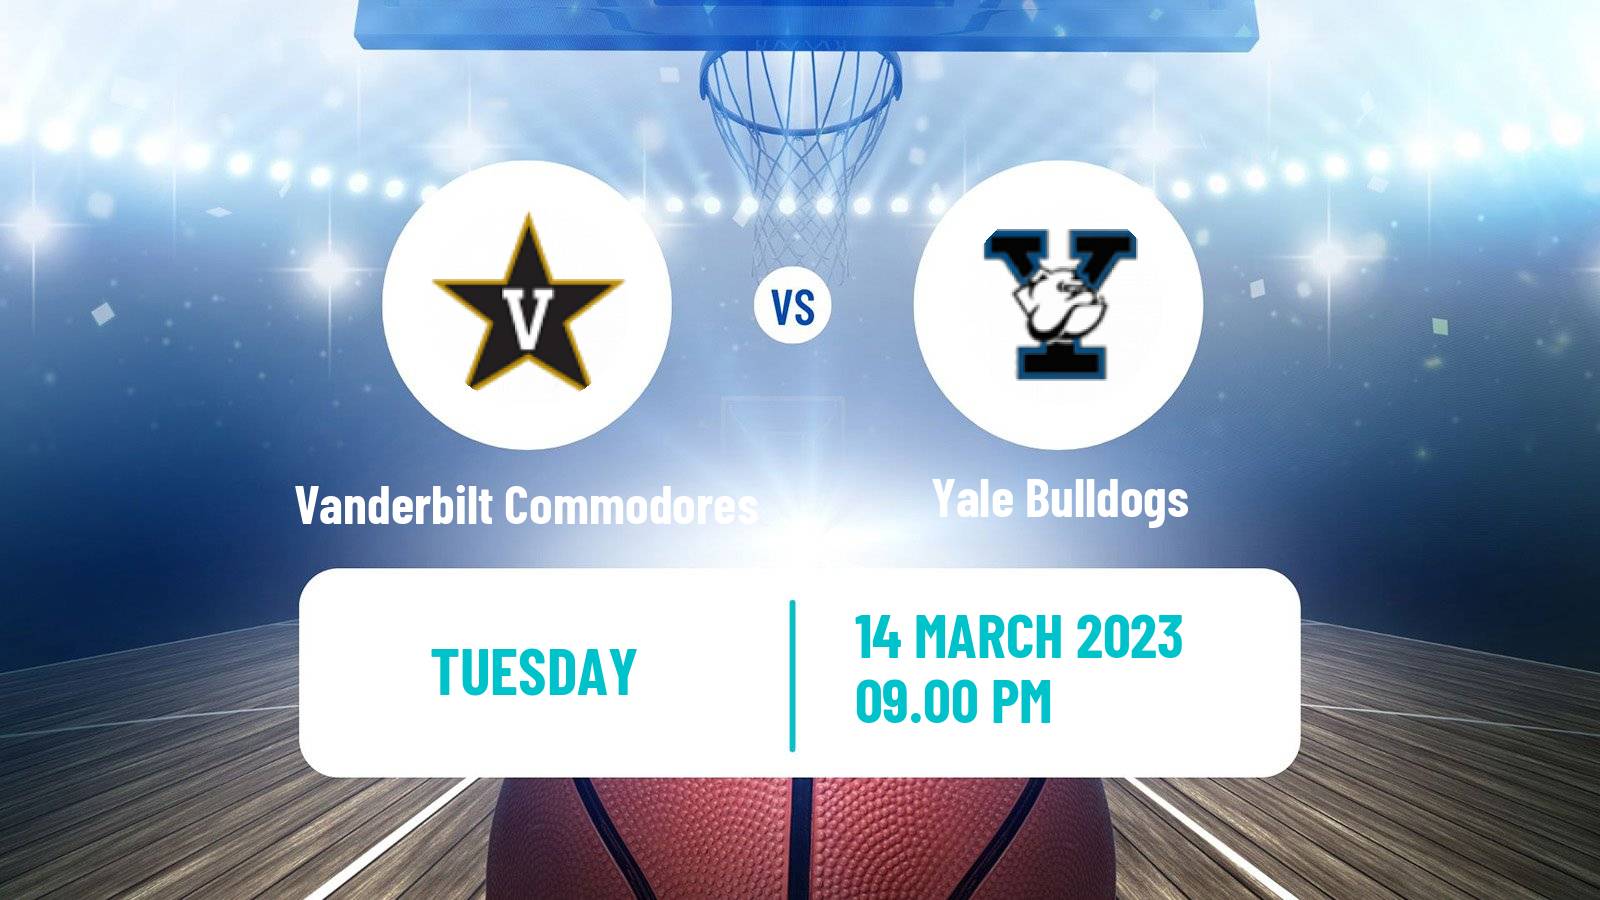 Basketball NIT Vanderbilt Commodores - Yale Bulldogs